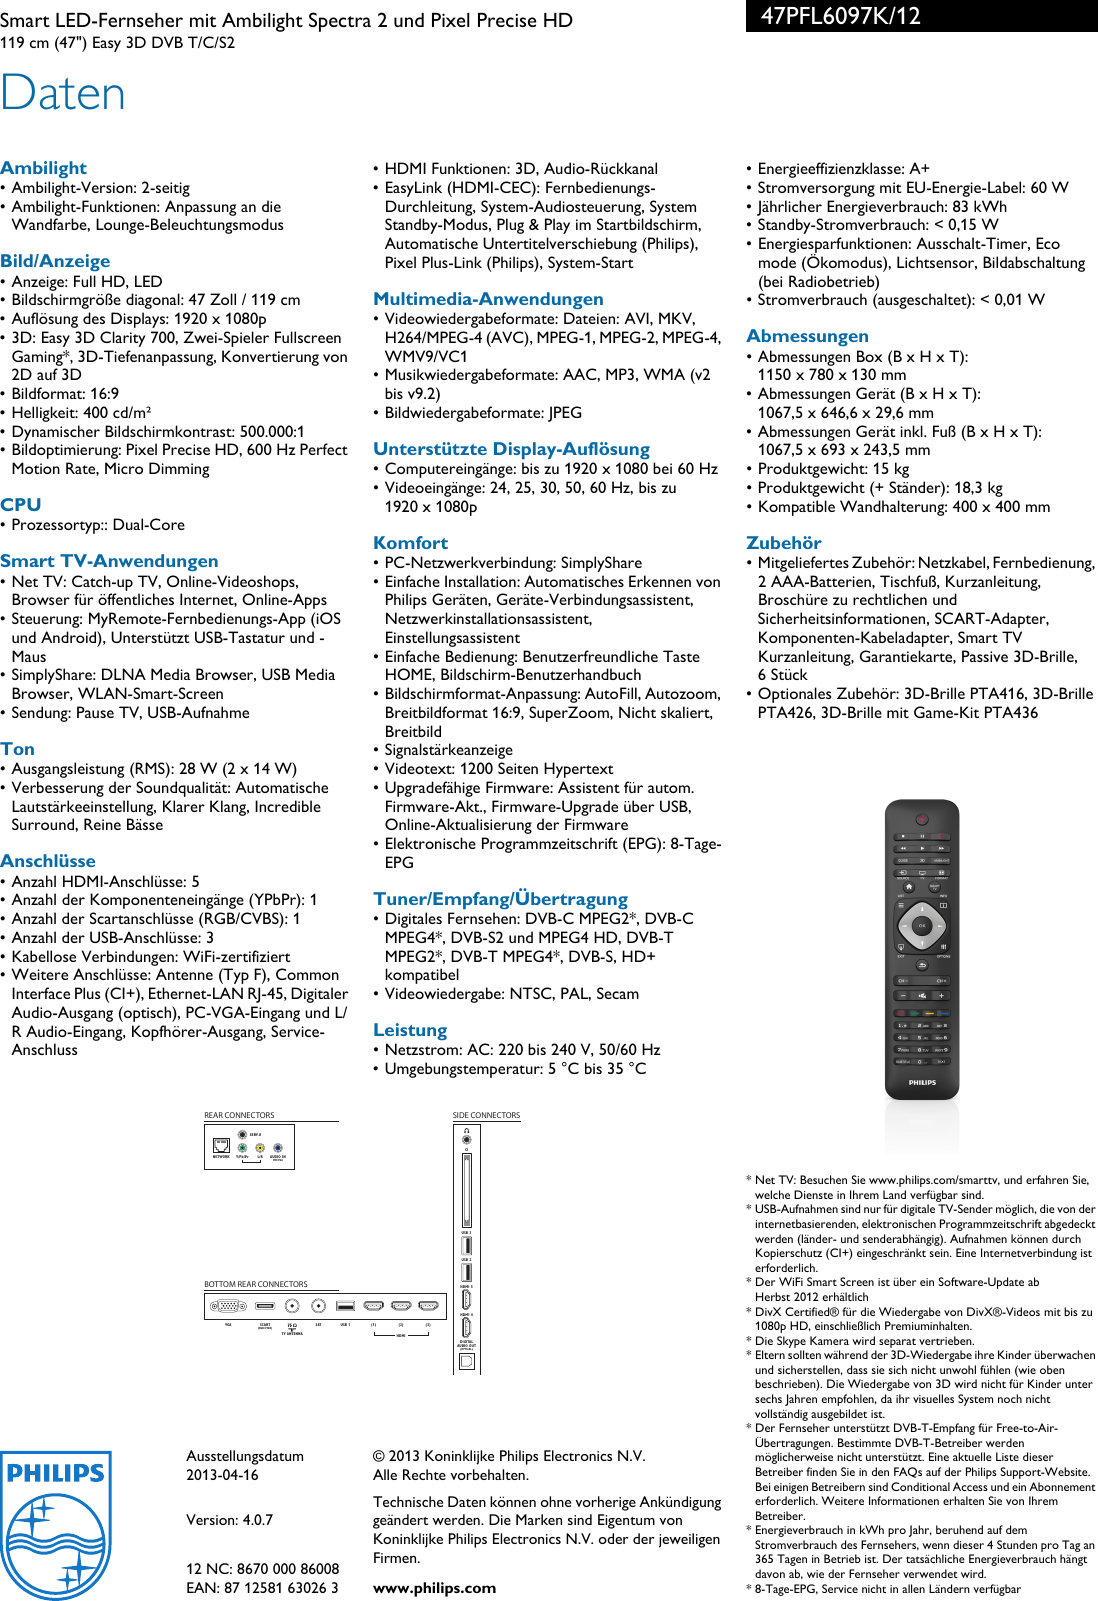 Page 3 of 3 - Philips 47PFL6097K/12 Leaflet 47PFL6097K_12 Released Germany (German)  User Manual Datenblatt 47pfl6097k 12 Pss Deuat